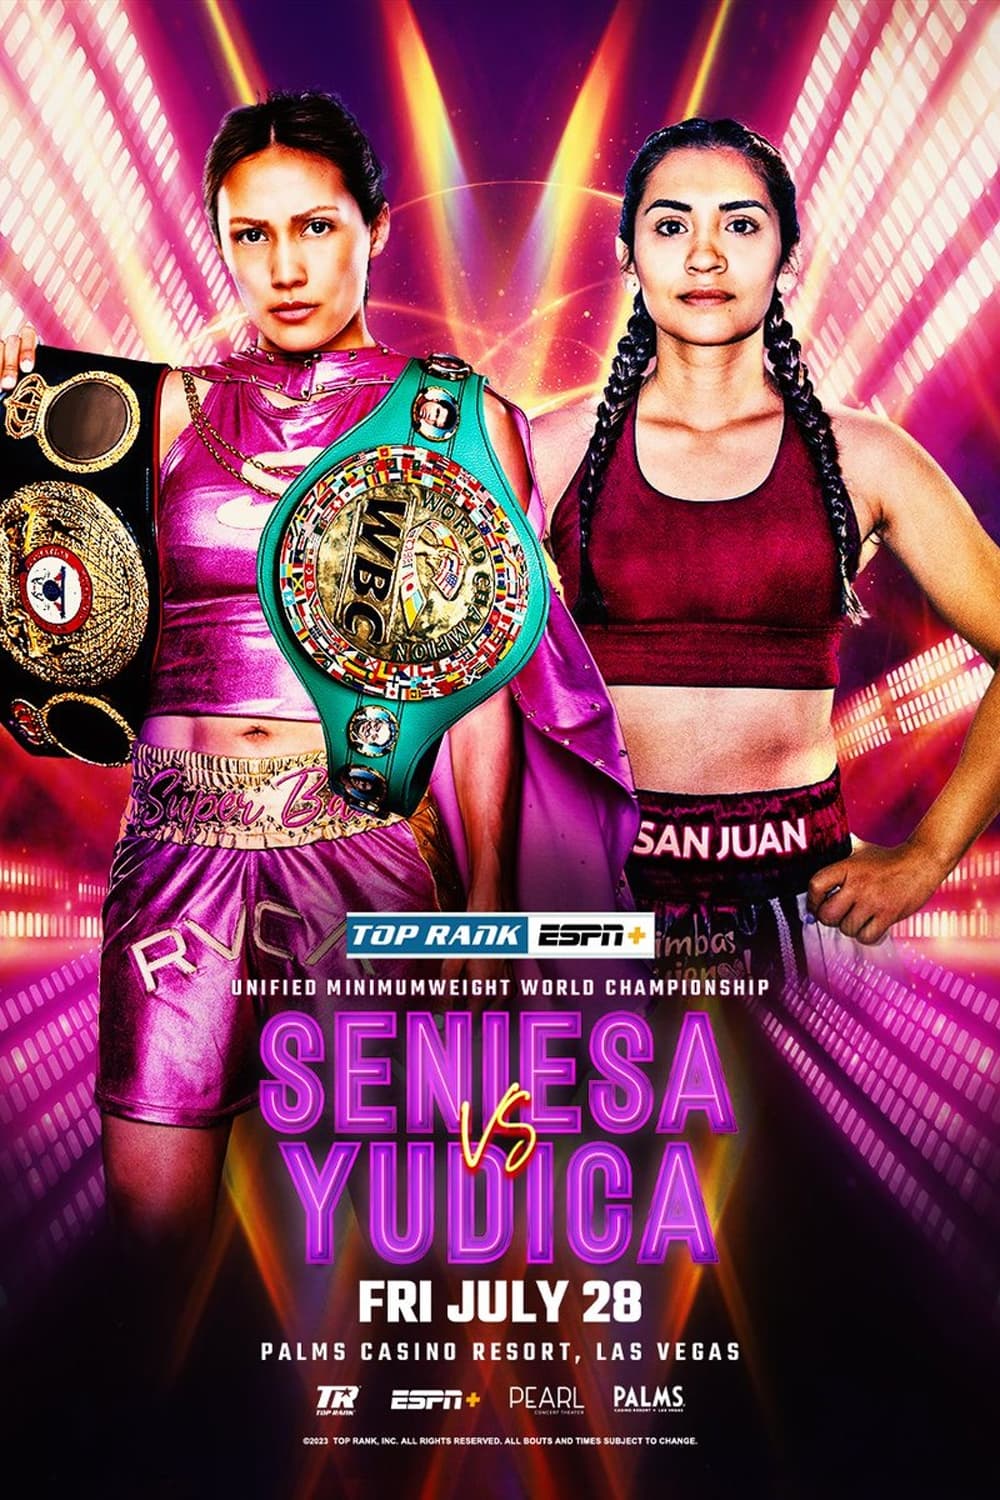 Seniesa Estrada vs. Leonela Yudica